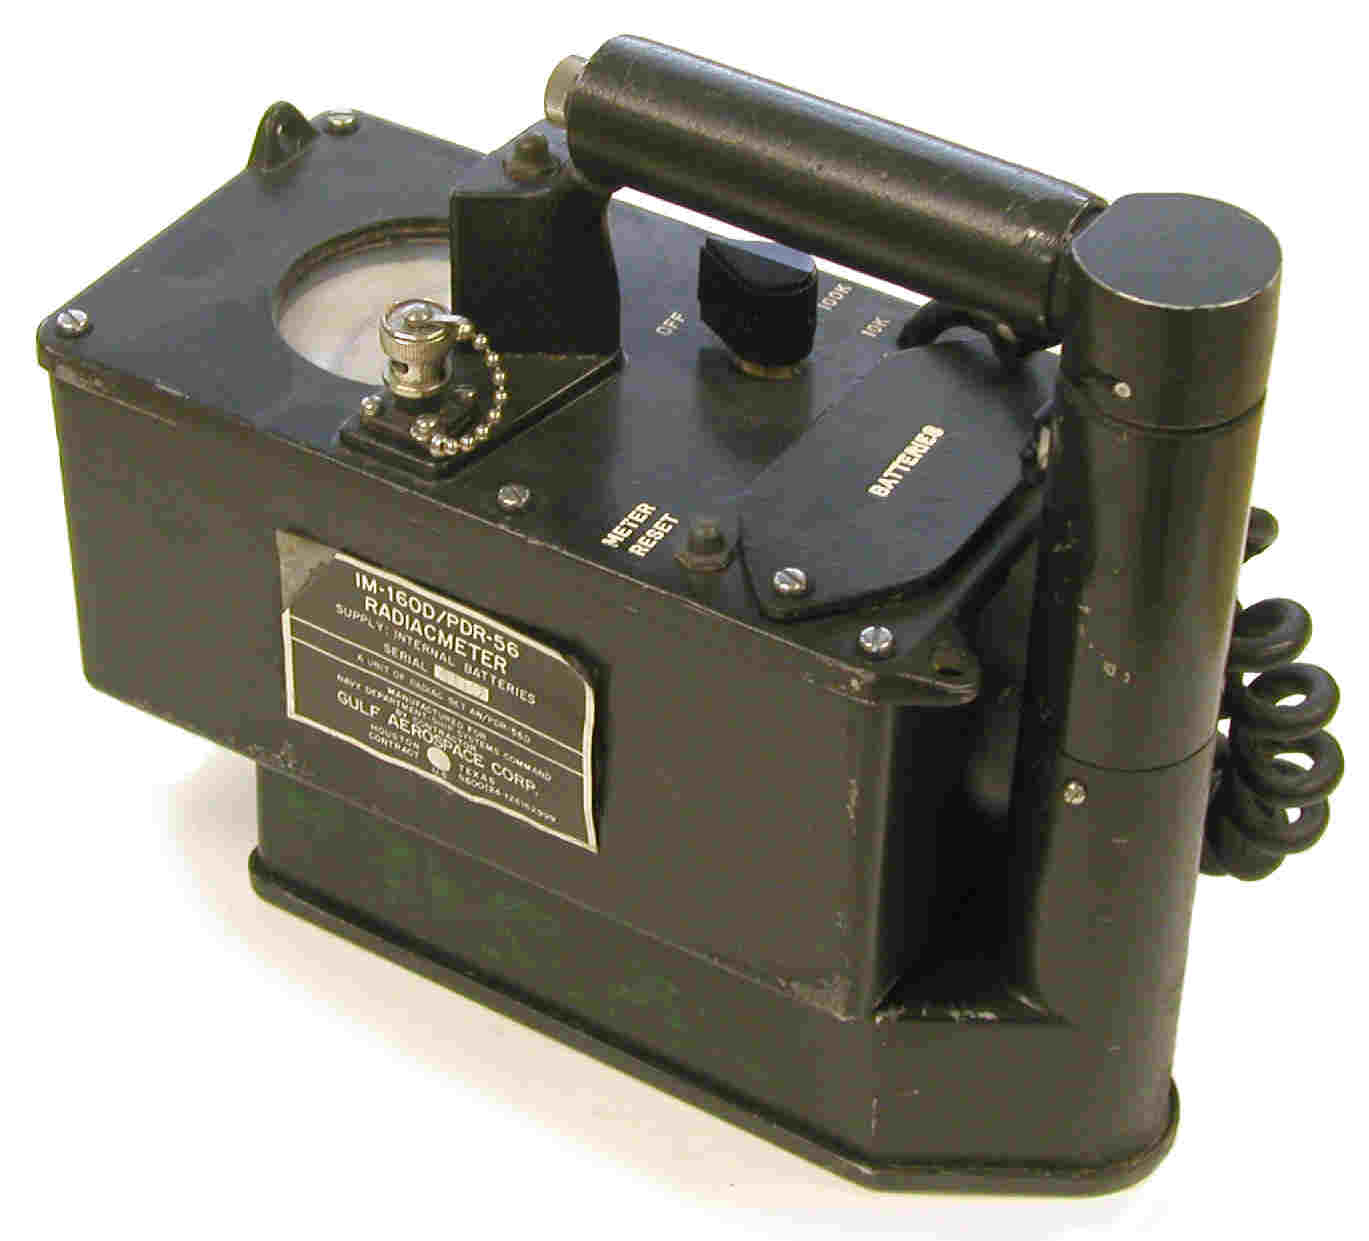 IM-160D/PDR-56 Alpha Scintillator Survey Meter